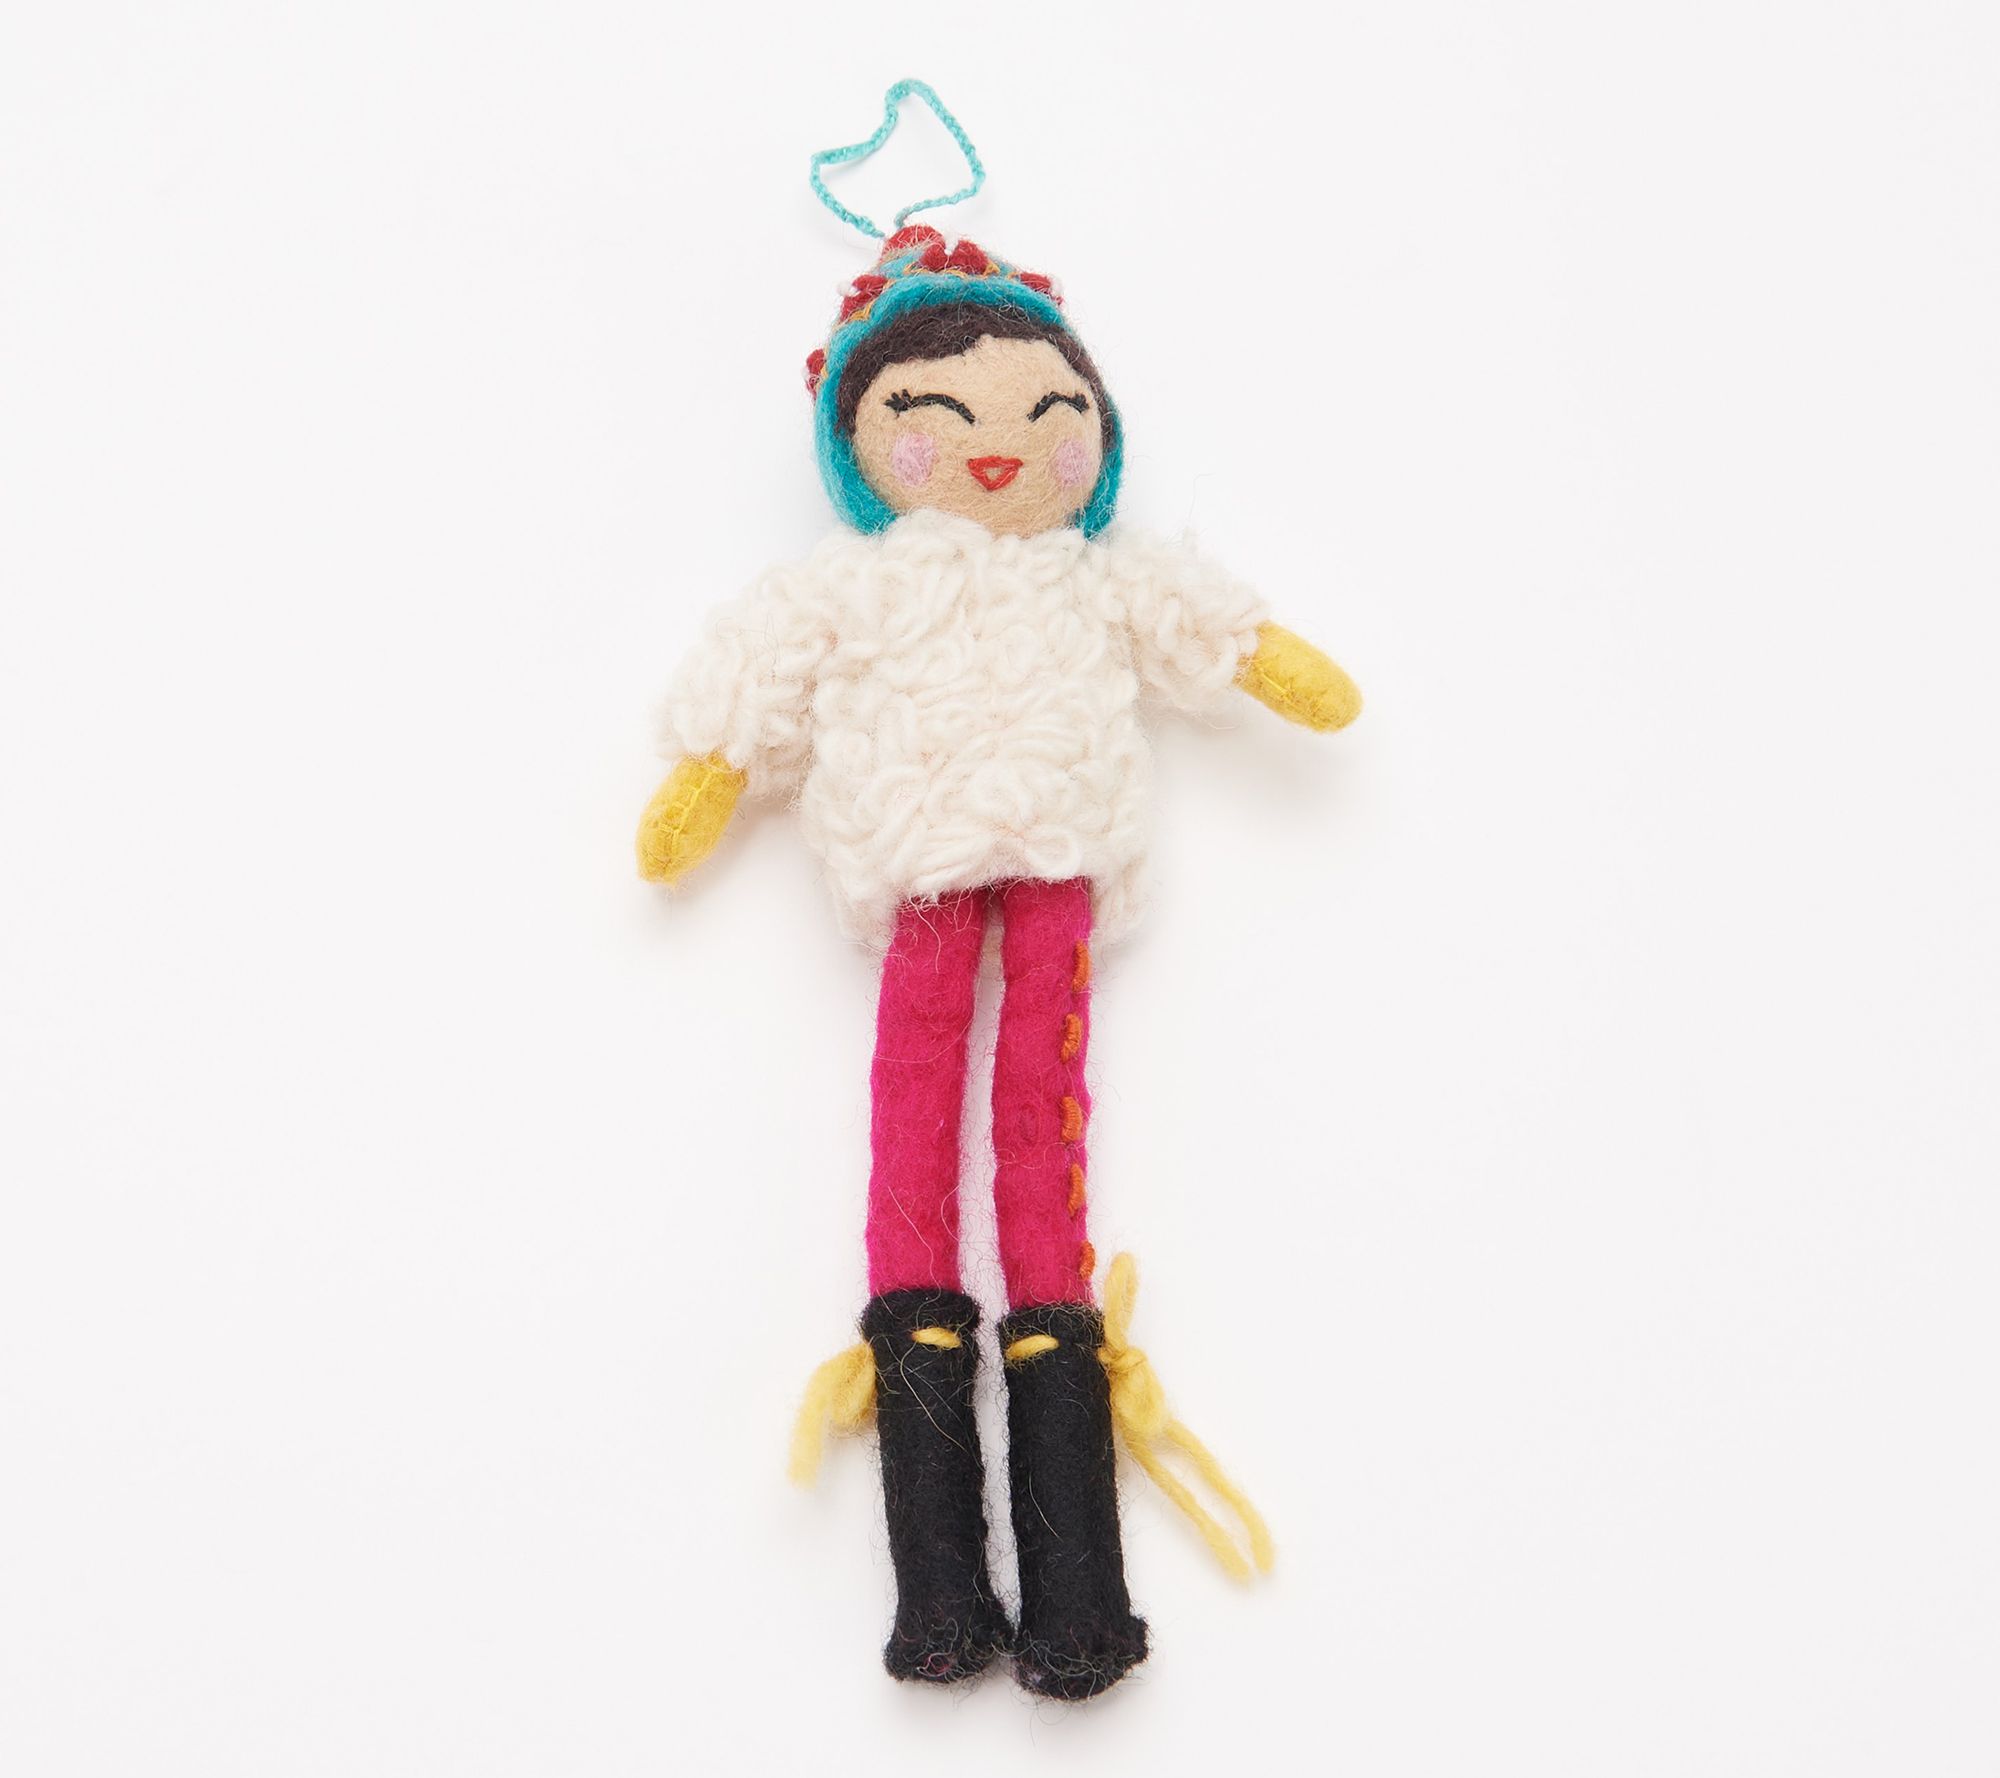 Crochet Baby & Kids Downloads - Clothespin Dolls Playset Crochet Pattern